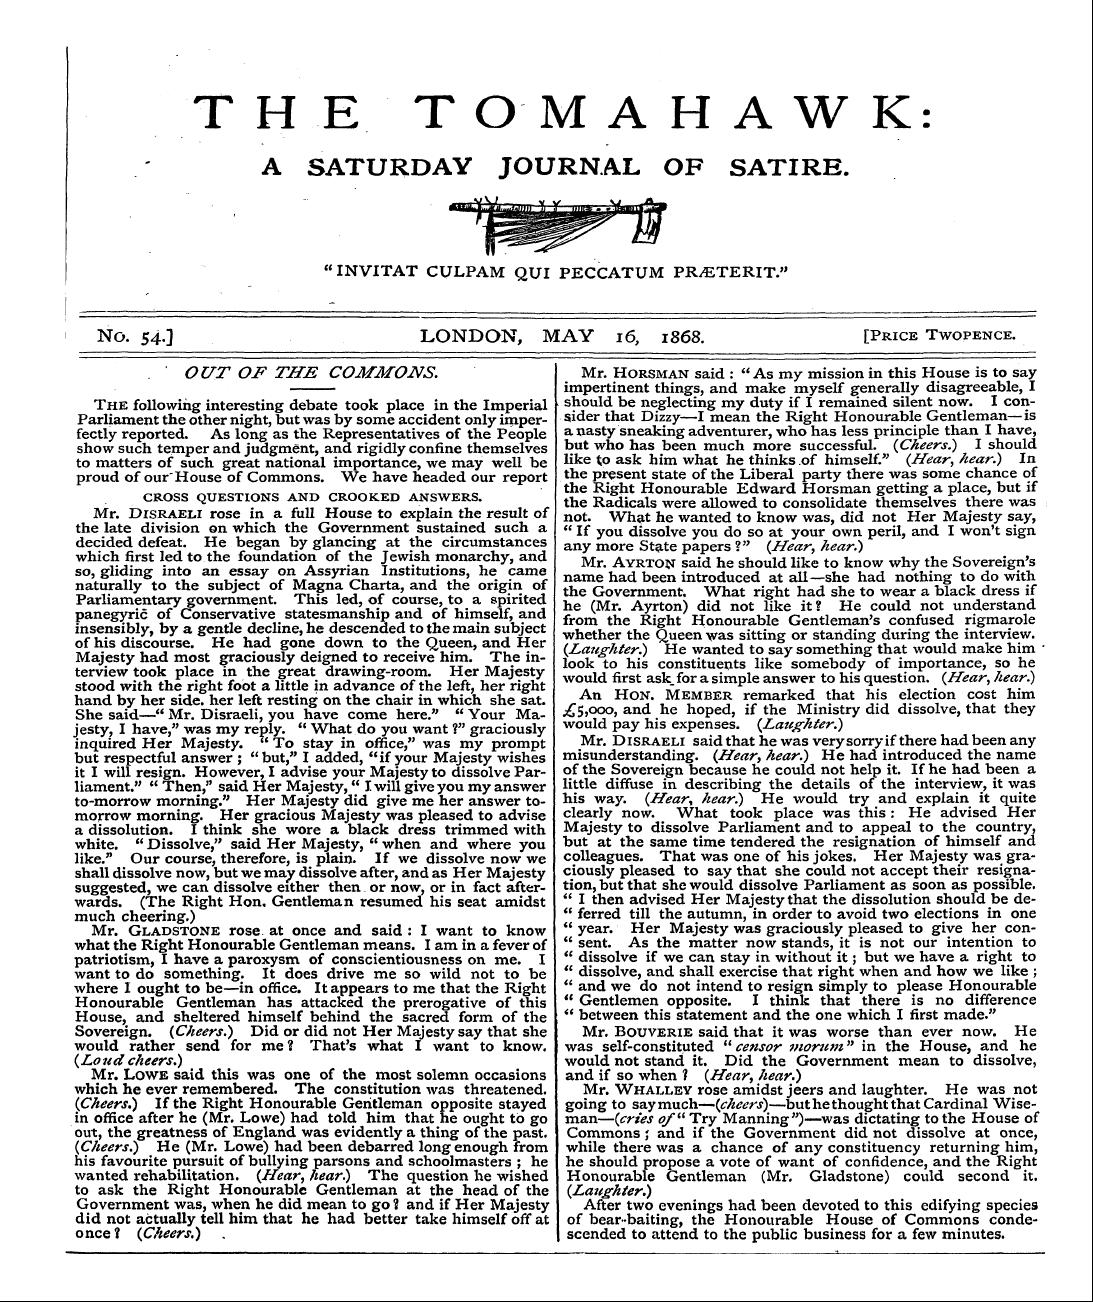 Tomahawk (1867-1870): jS F Y, 1st edition - The Tomahawk: A Saturday Journal Of Sati...